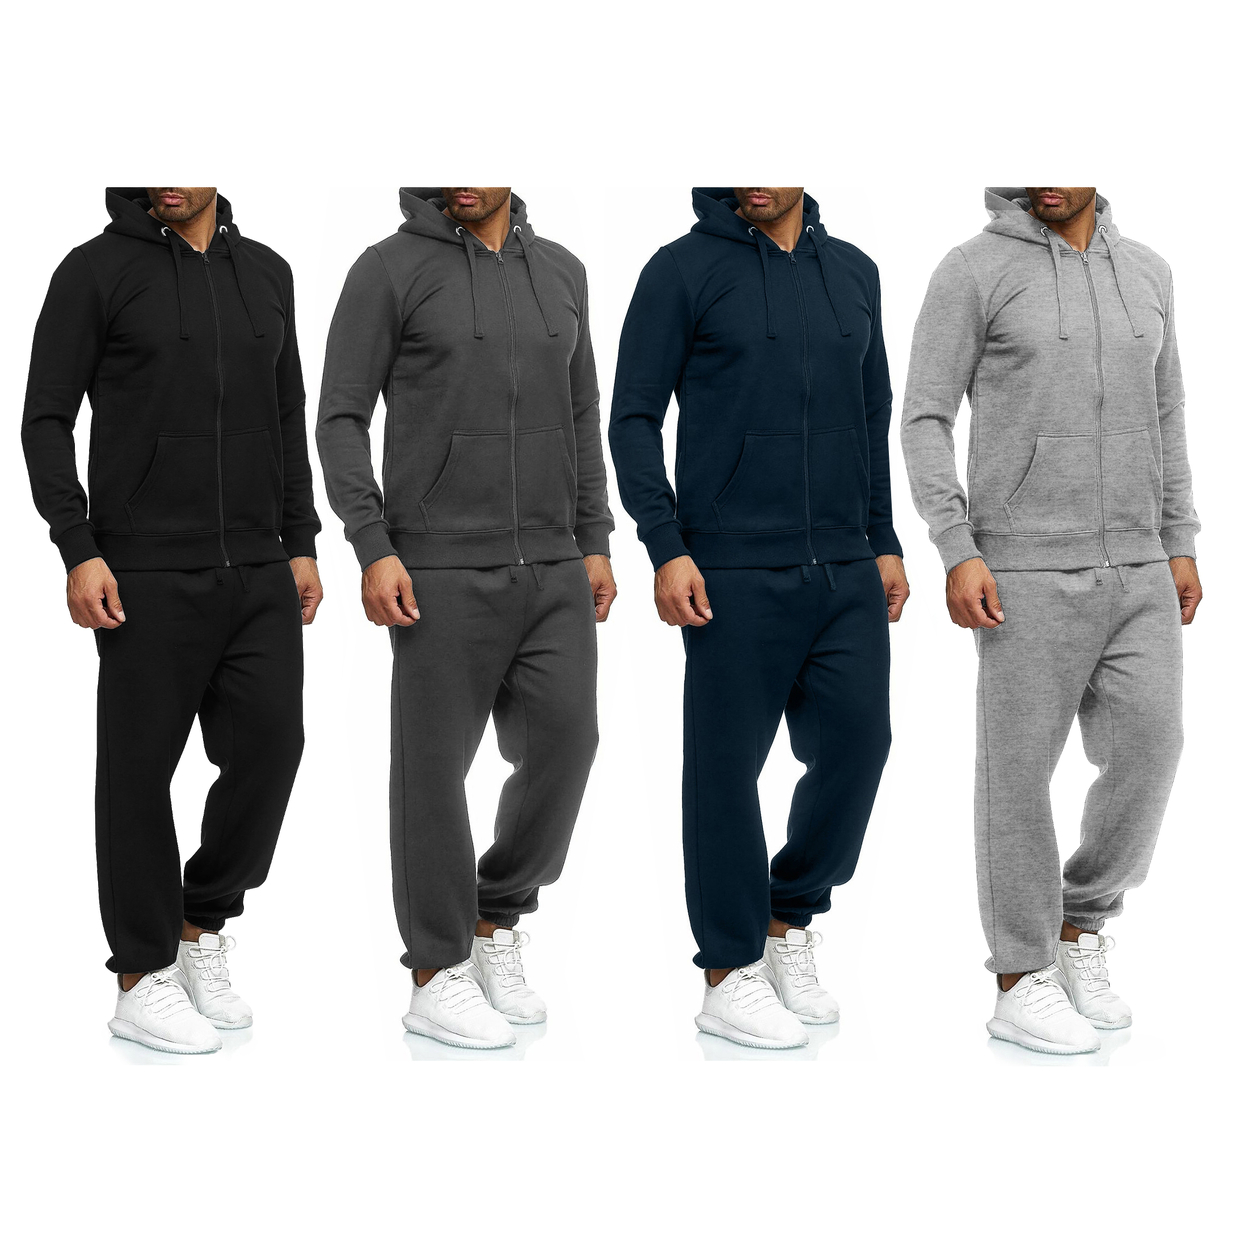 2/4-Piece: Men's Winter Warm Cozy Athletic Multi-Pockets BIG & TALL Sweatsuit Set - Grey, 2, 3xl